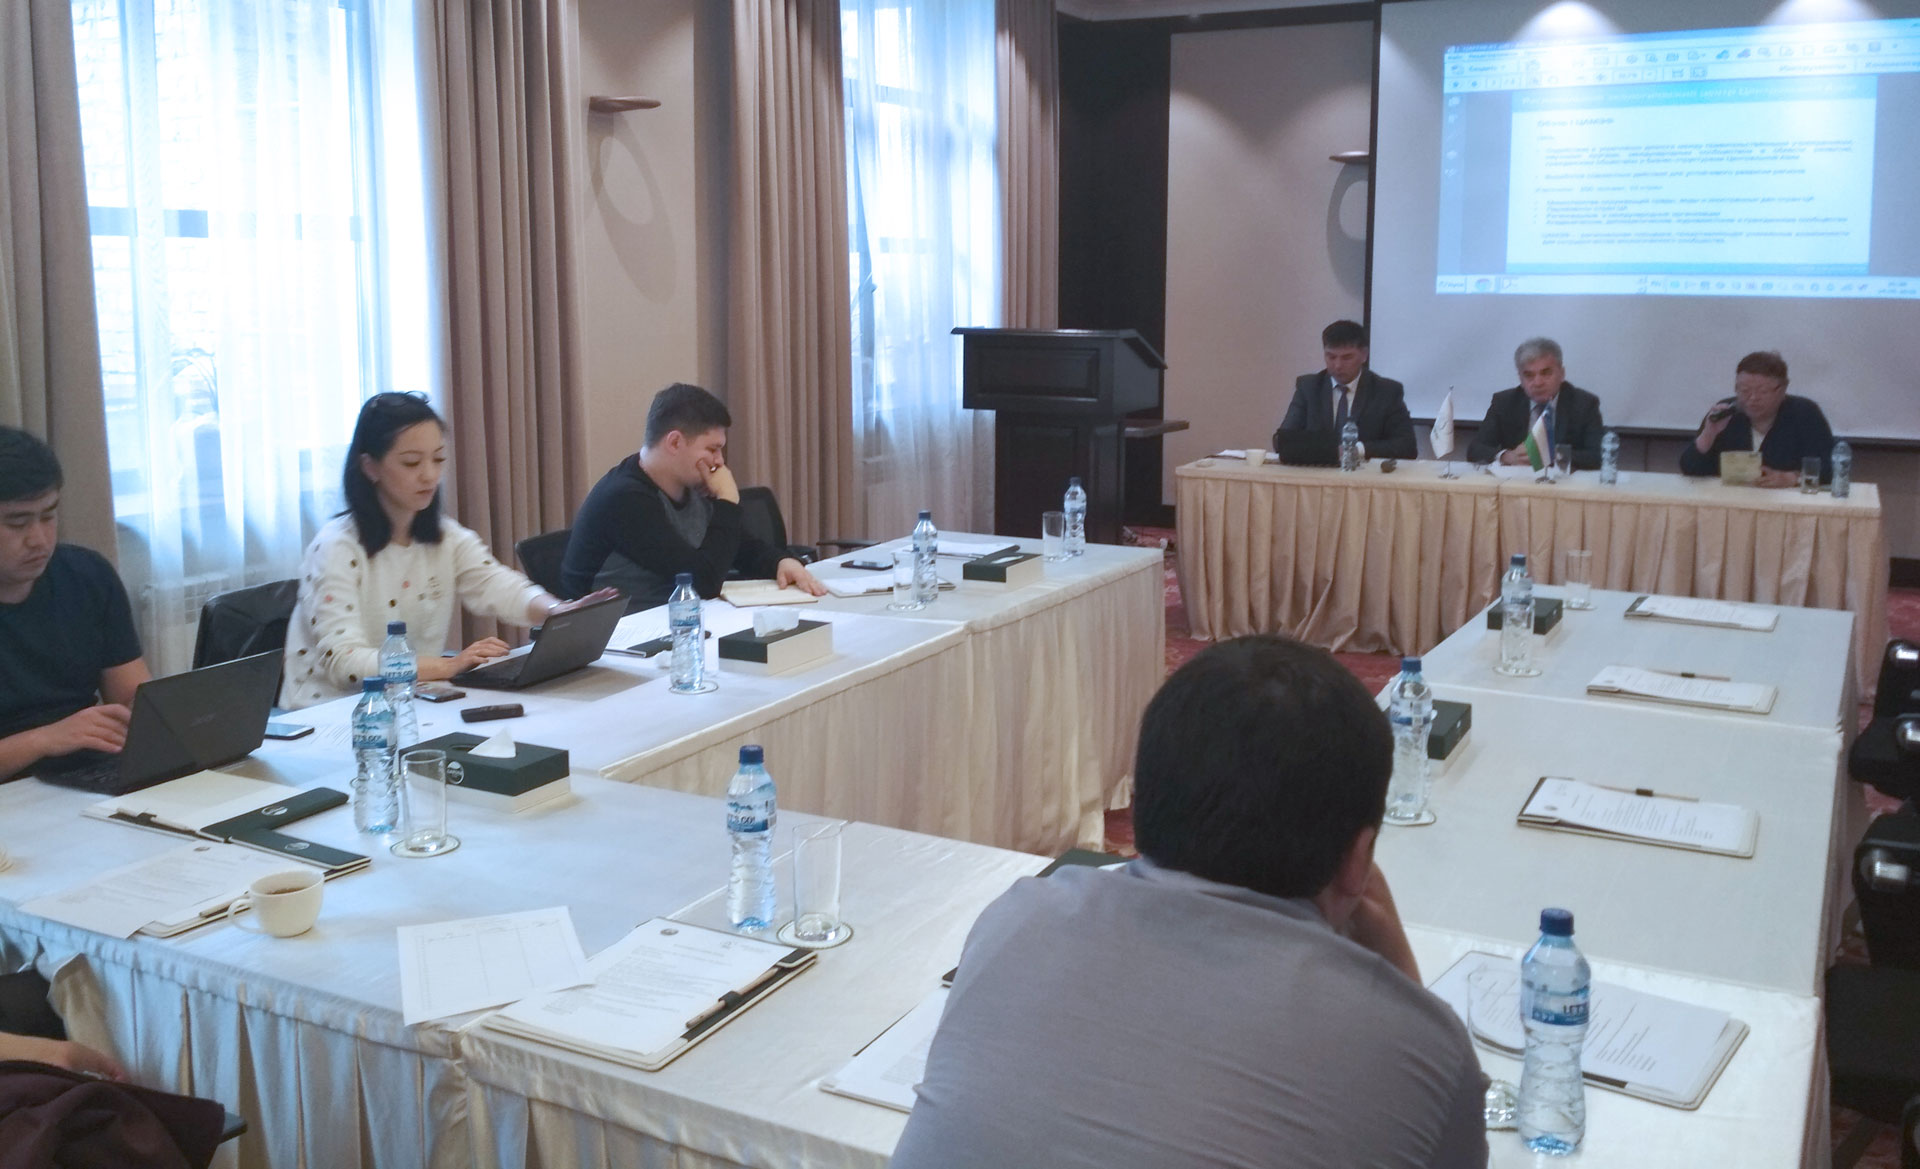  Брифинг ЦАМЭФ 2018 прошел в Кыргызстане 